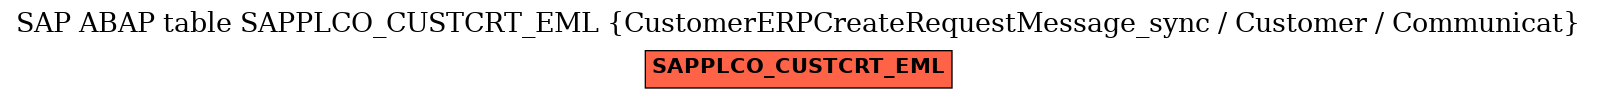 E-R Diagram for table SAPPLCO_CUSTCRT_EML (CustomerERPCreateRequestMessage_sync / Customer / Communicat)